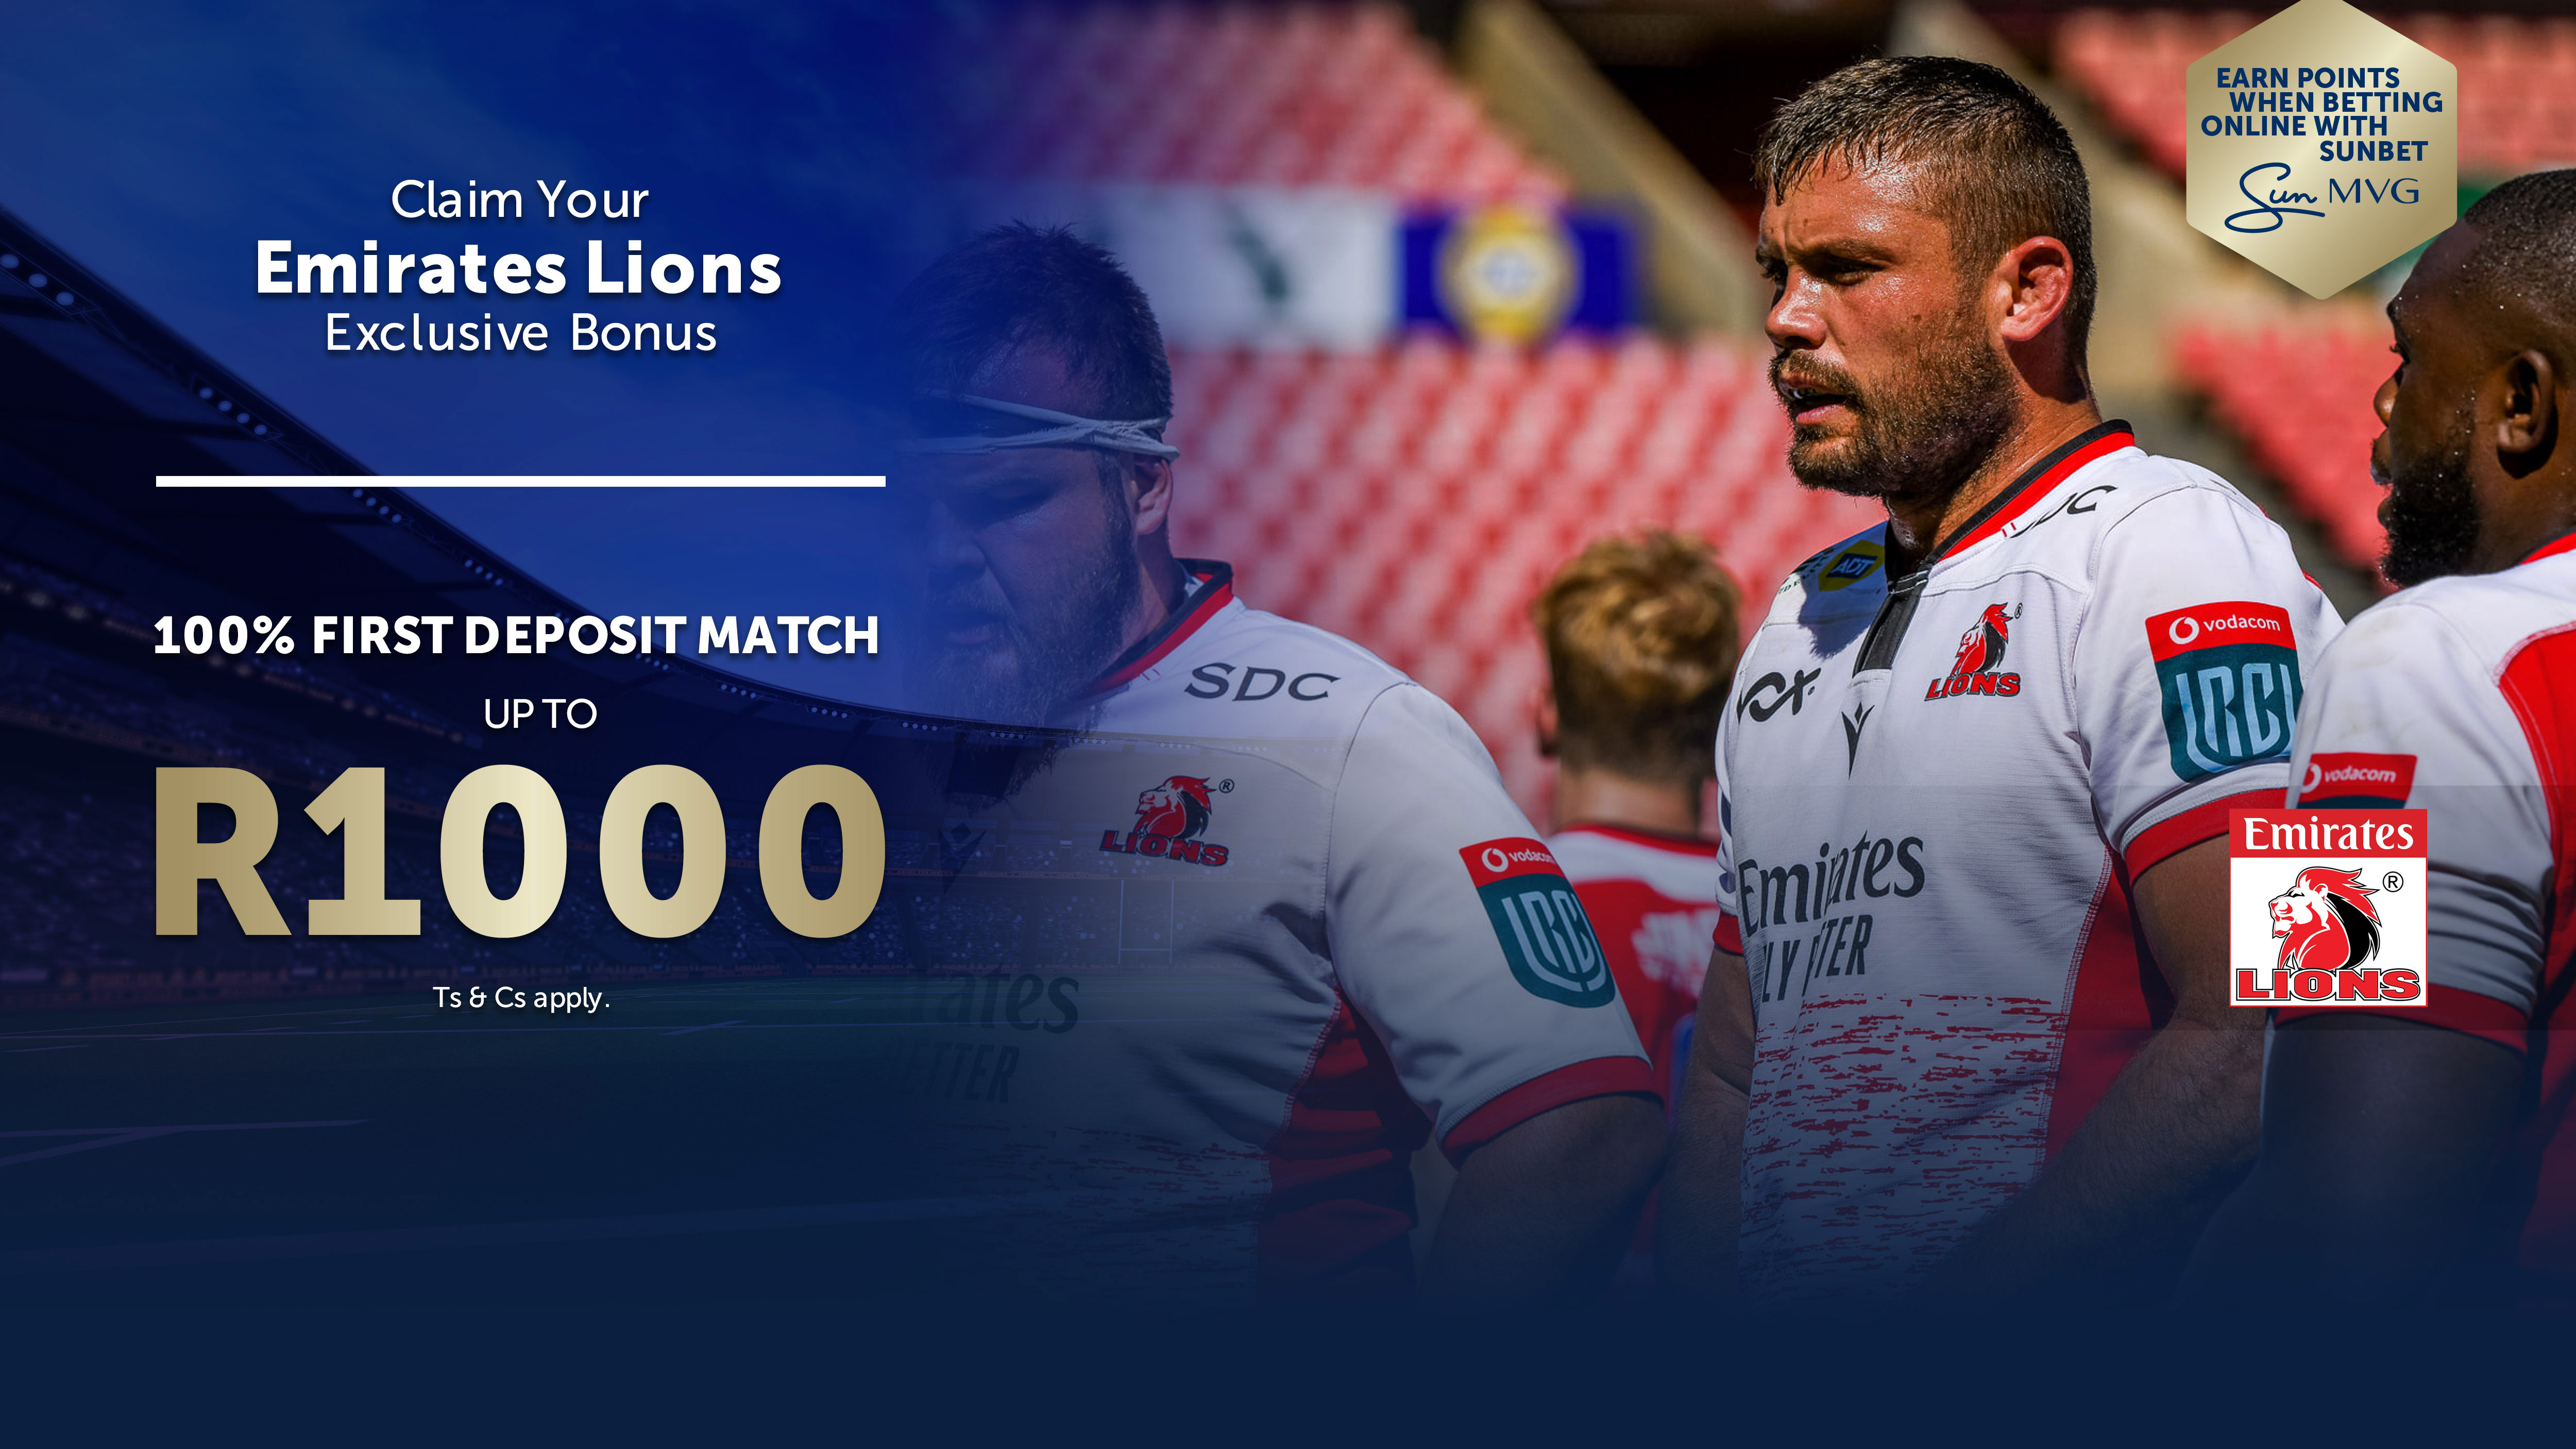 Claim Your Emirates Lions Exclusive Bonus | 100% 1st Match Deposit up to R1000 